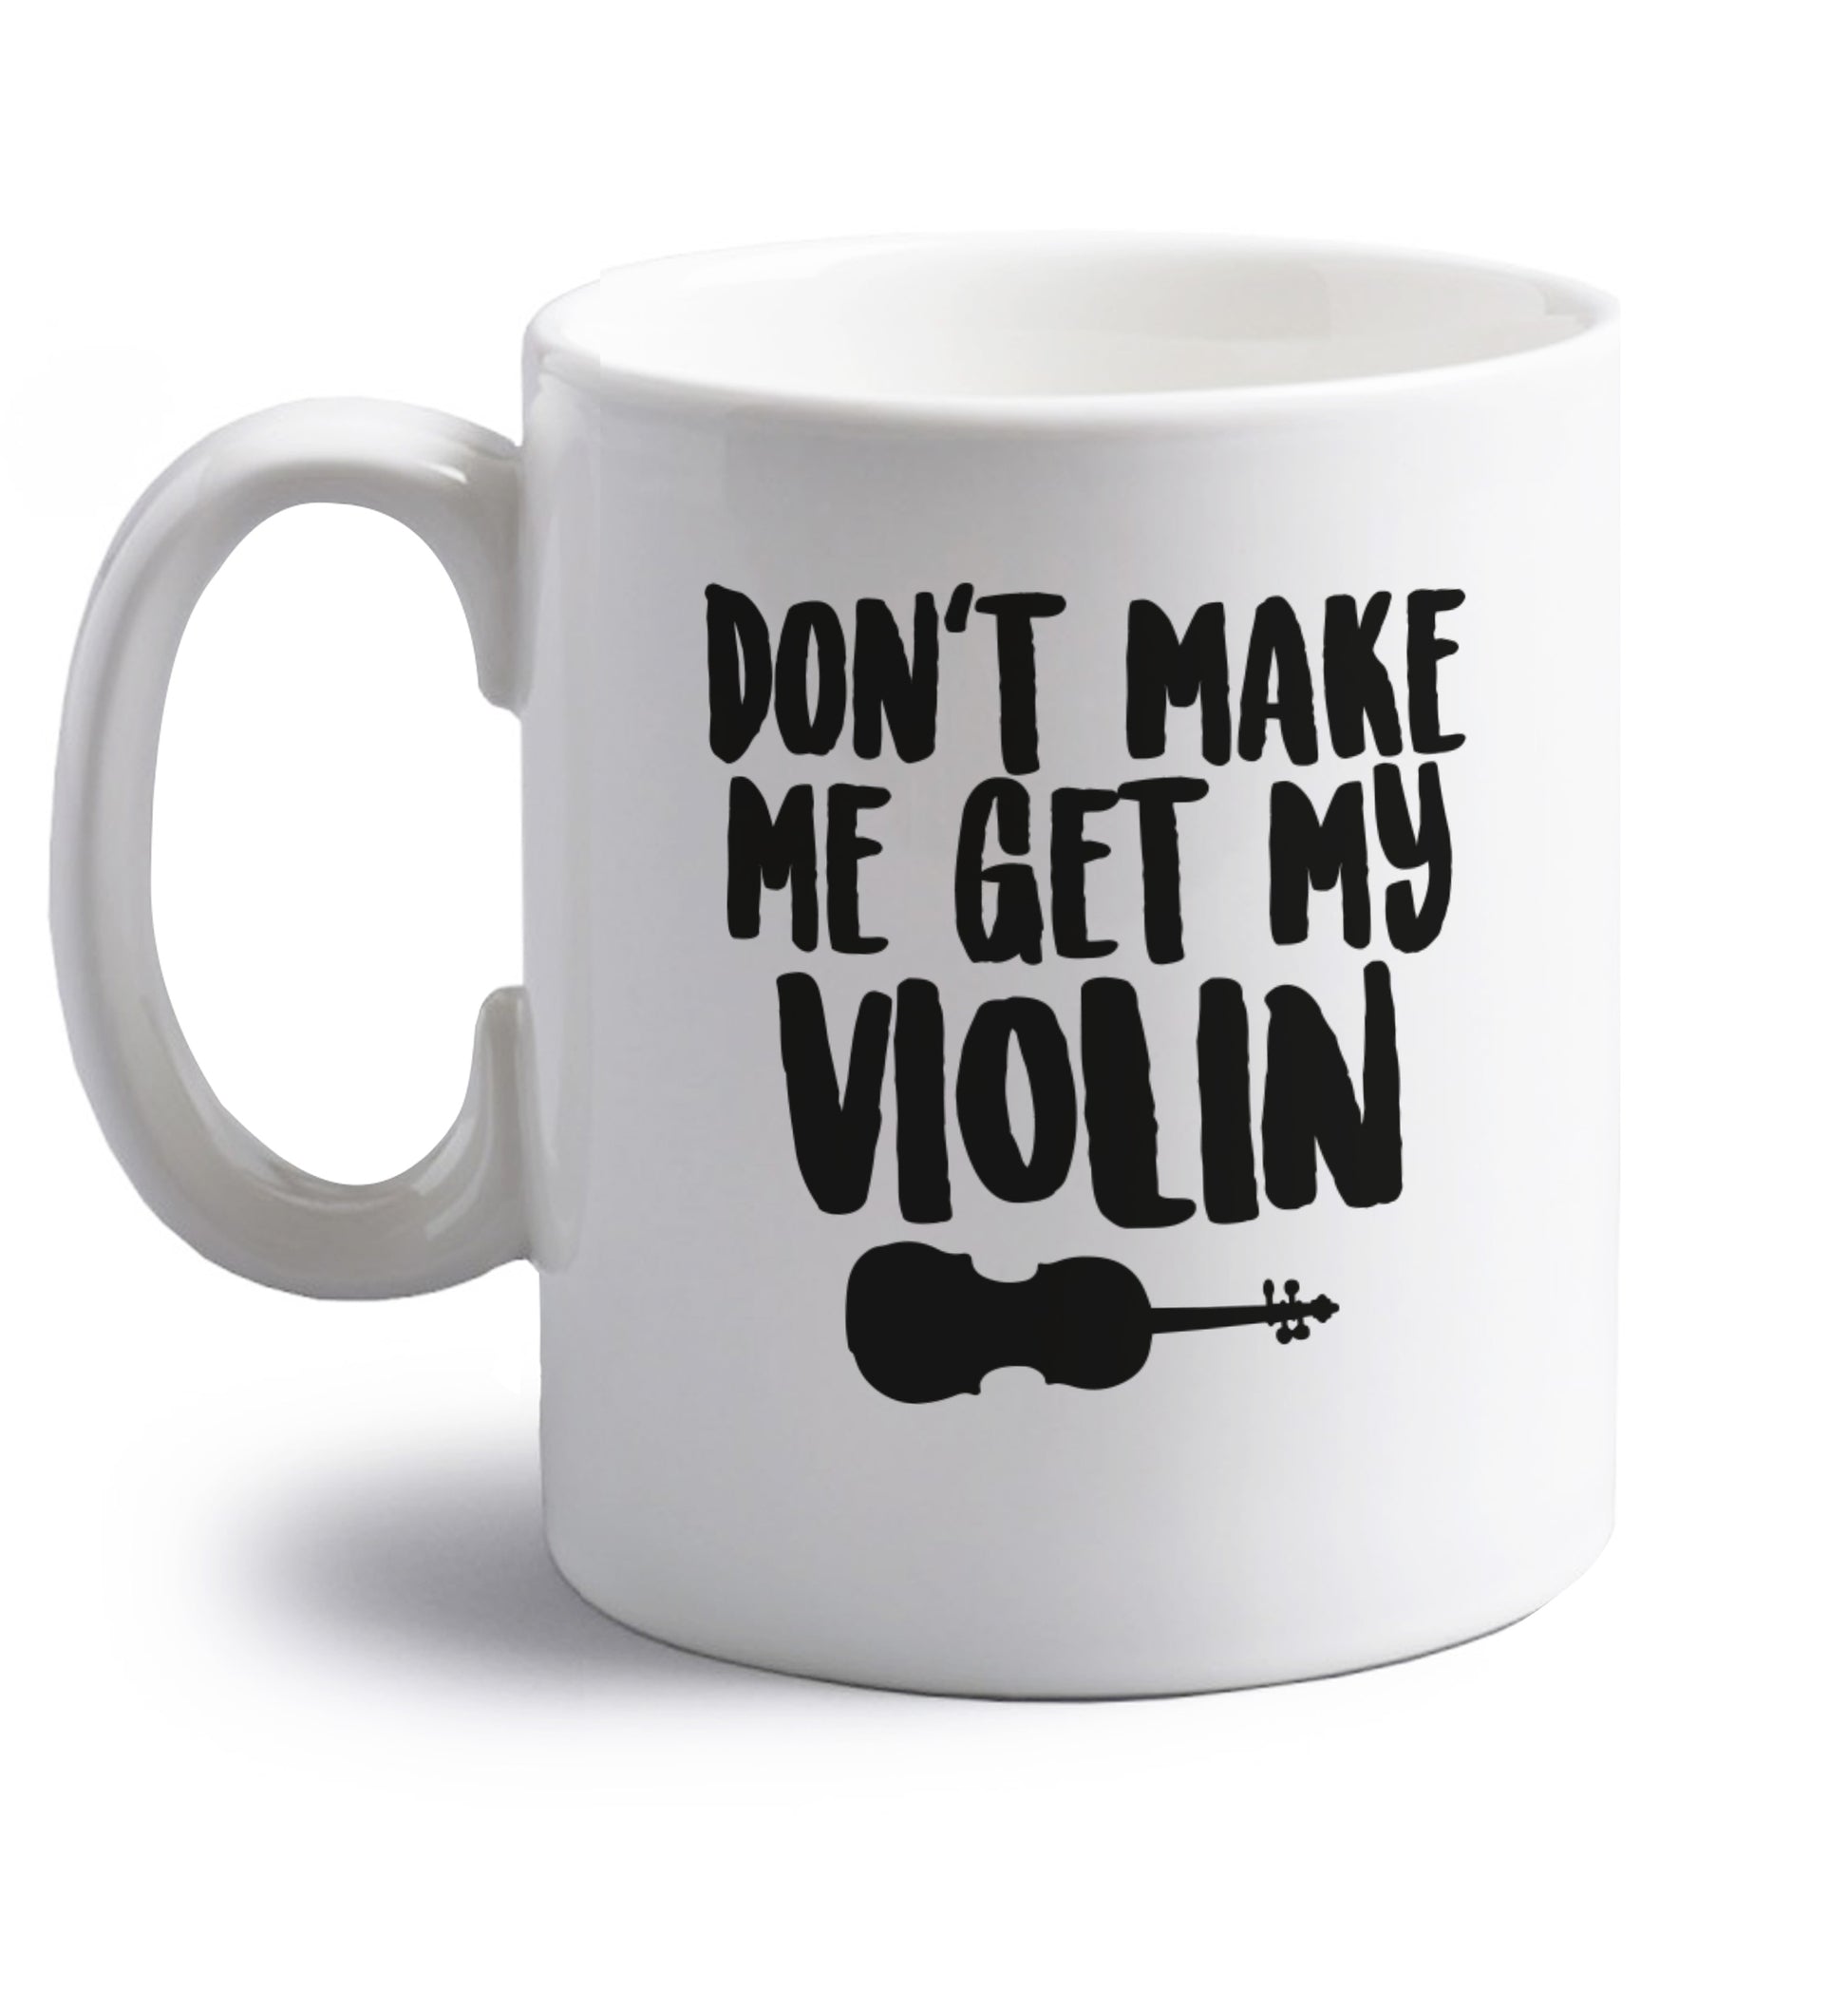 Don't make me get my violin right handed white ceramic mug 